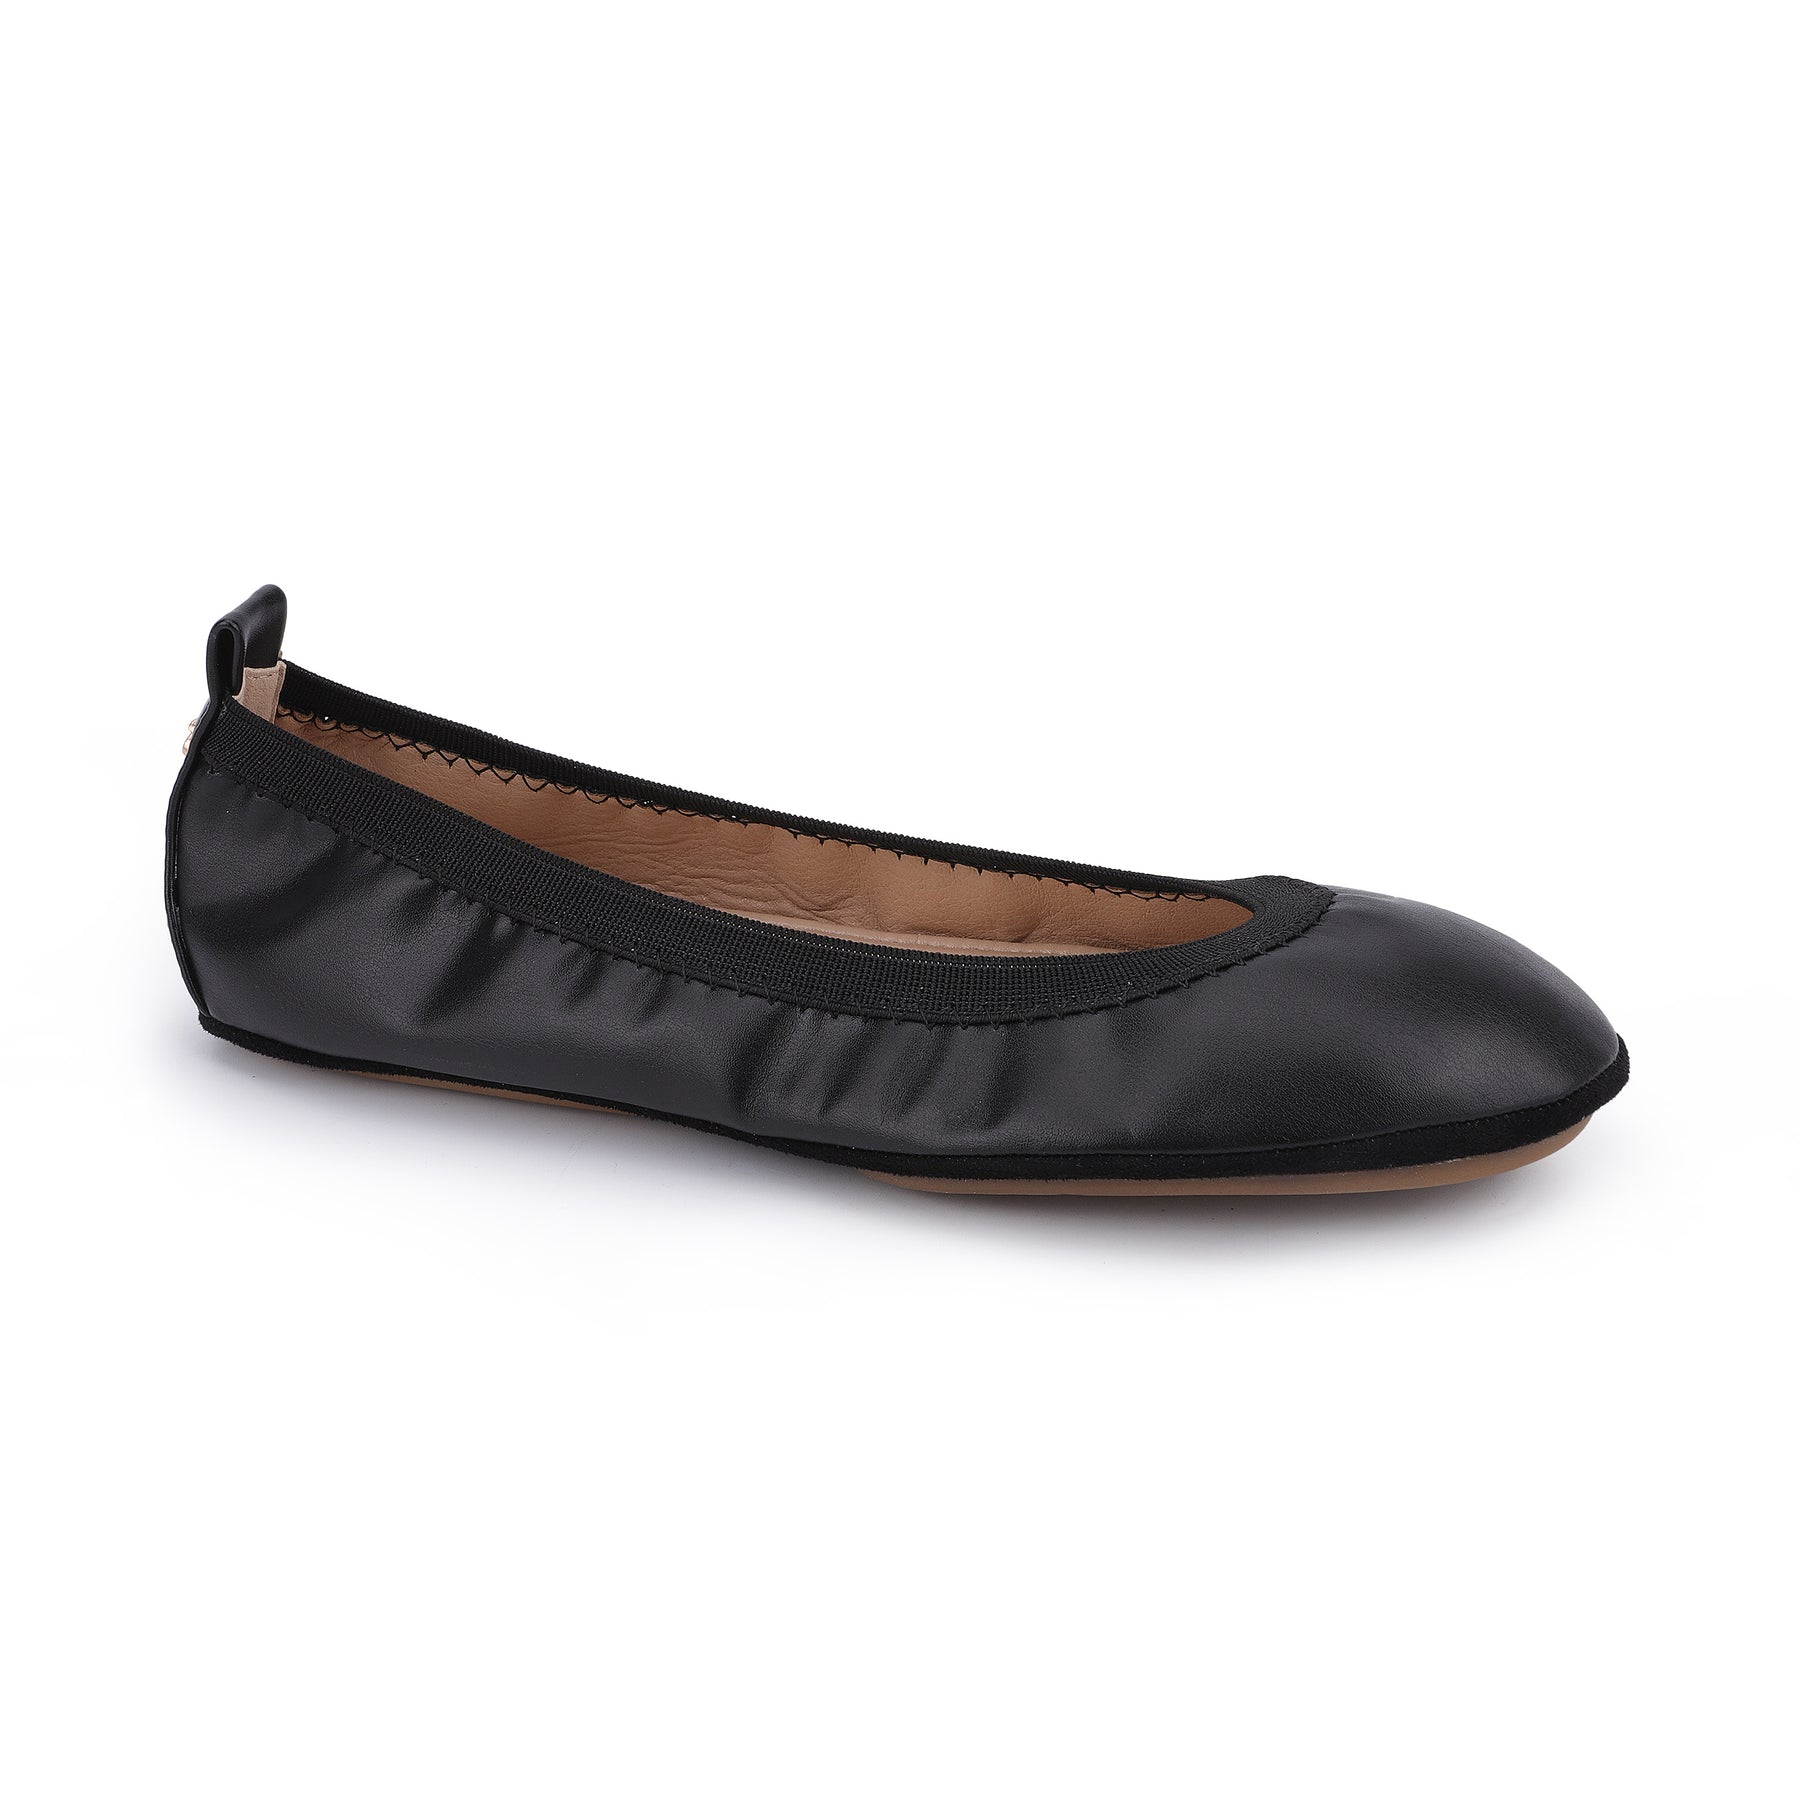 Samara Foldable Ballet Flat in Black Vegan